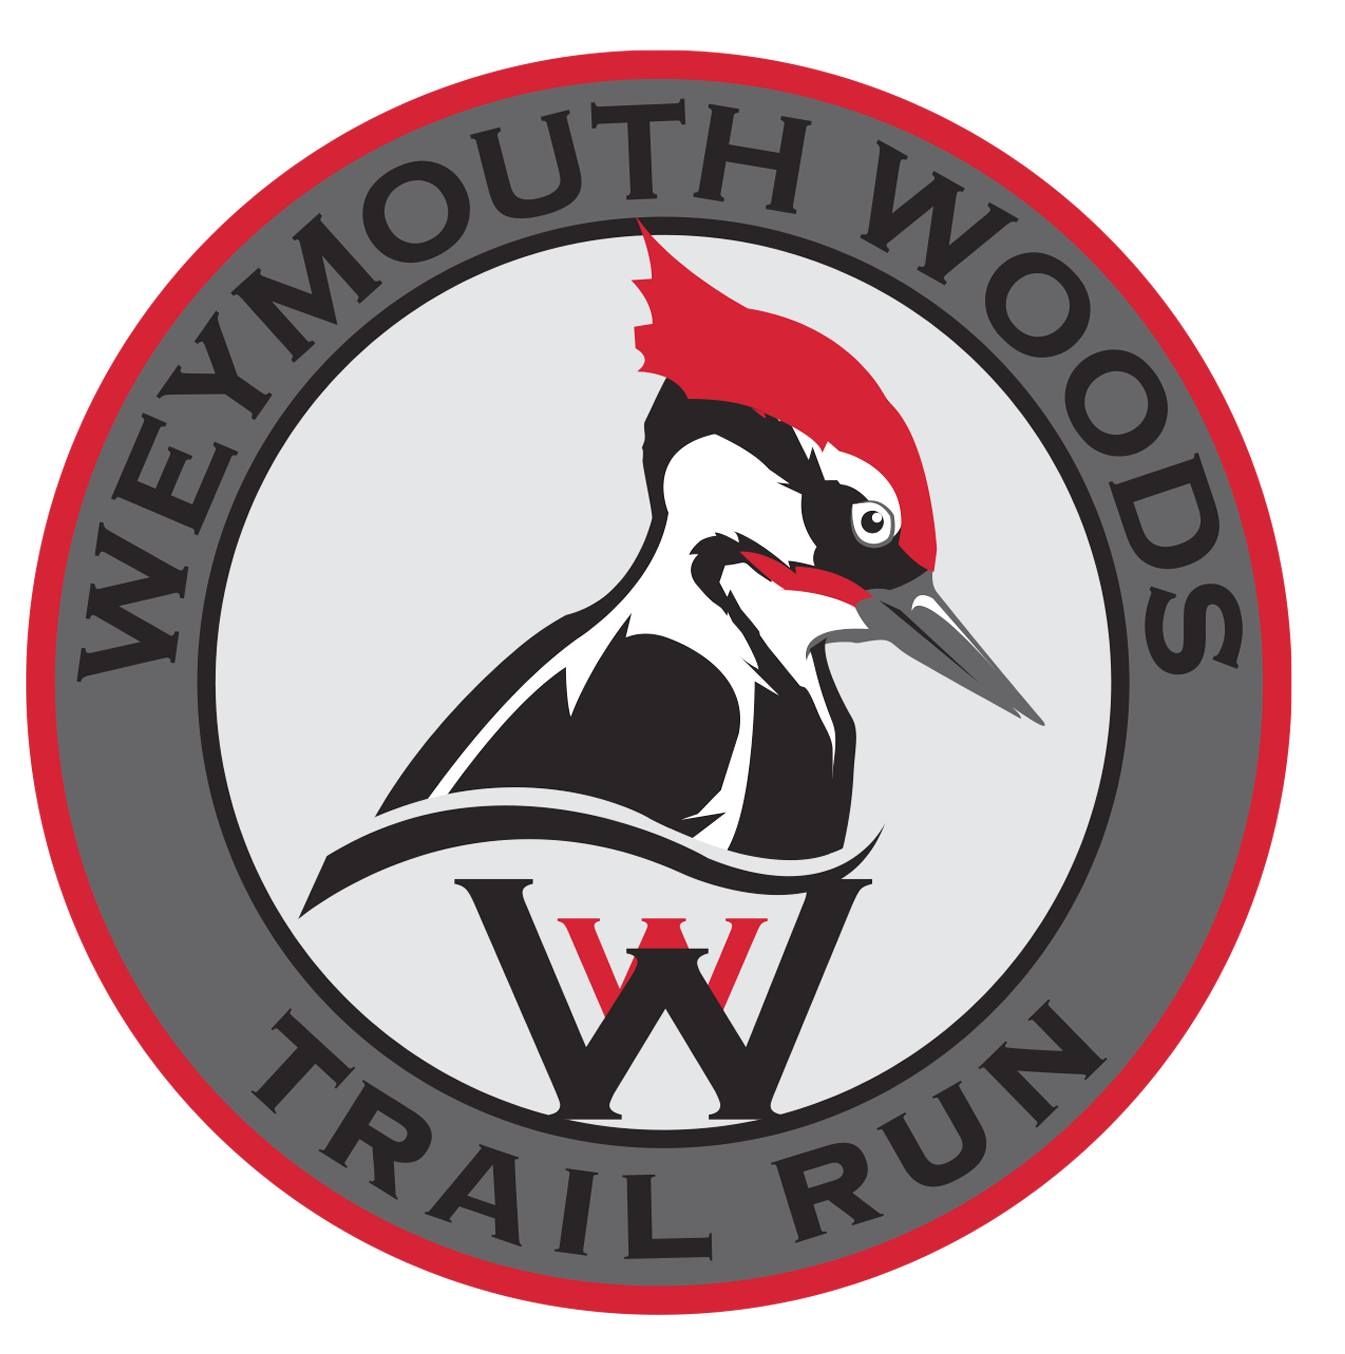 Weymouth Woods 25K & 50K Trail Run logo on RaceRaves